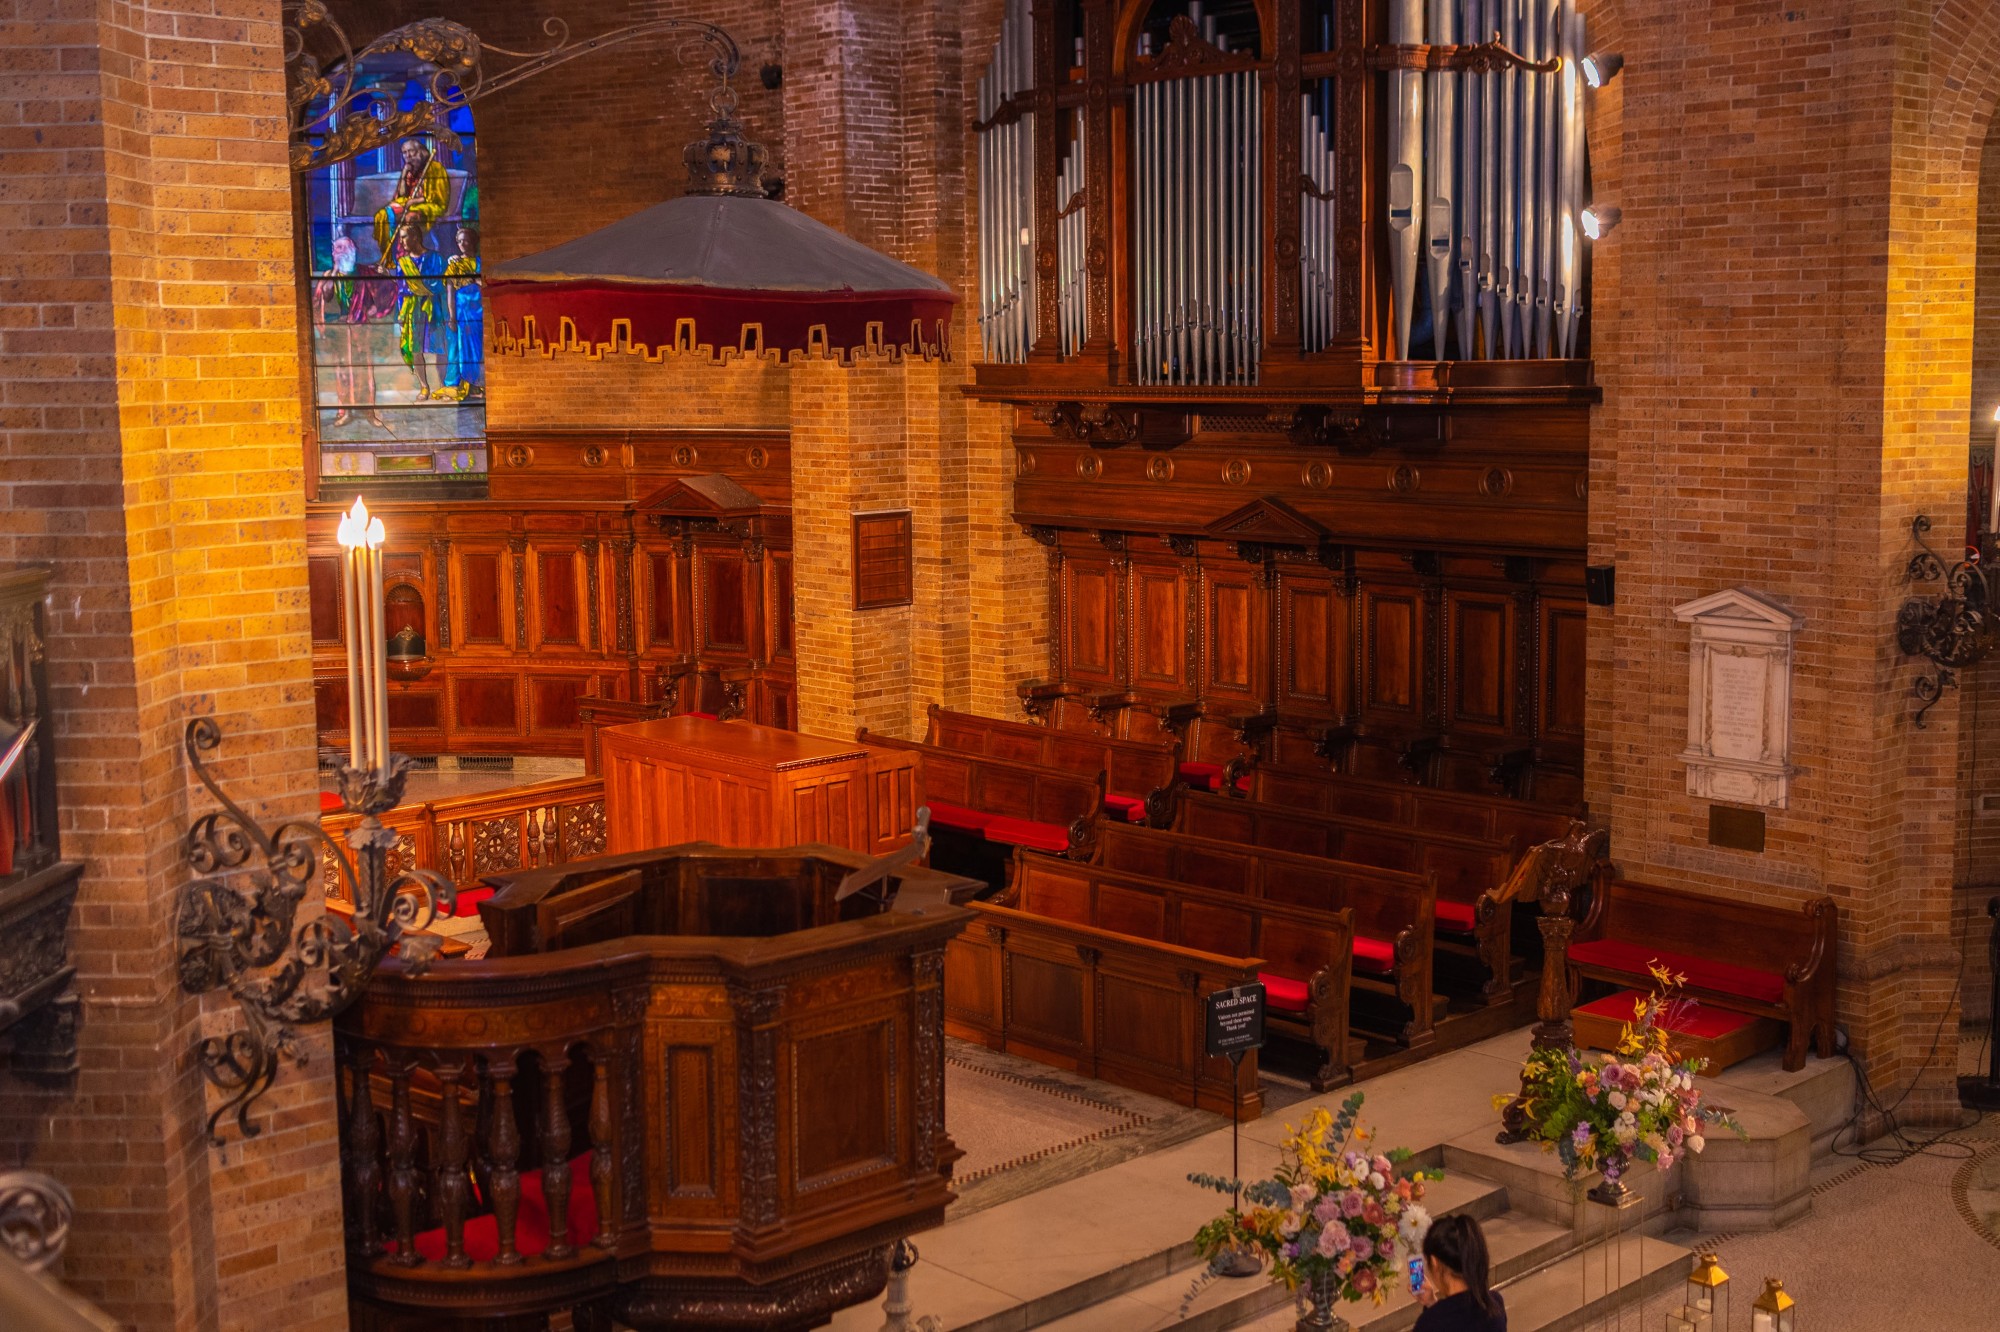 Original organ and wood seating in the St Pauls Chapel choir